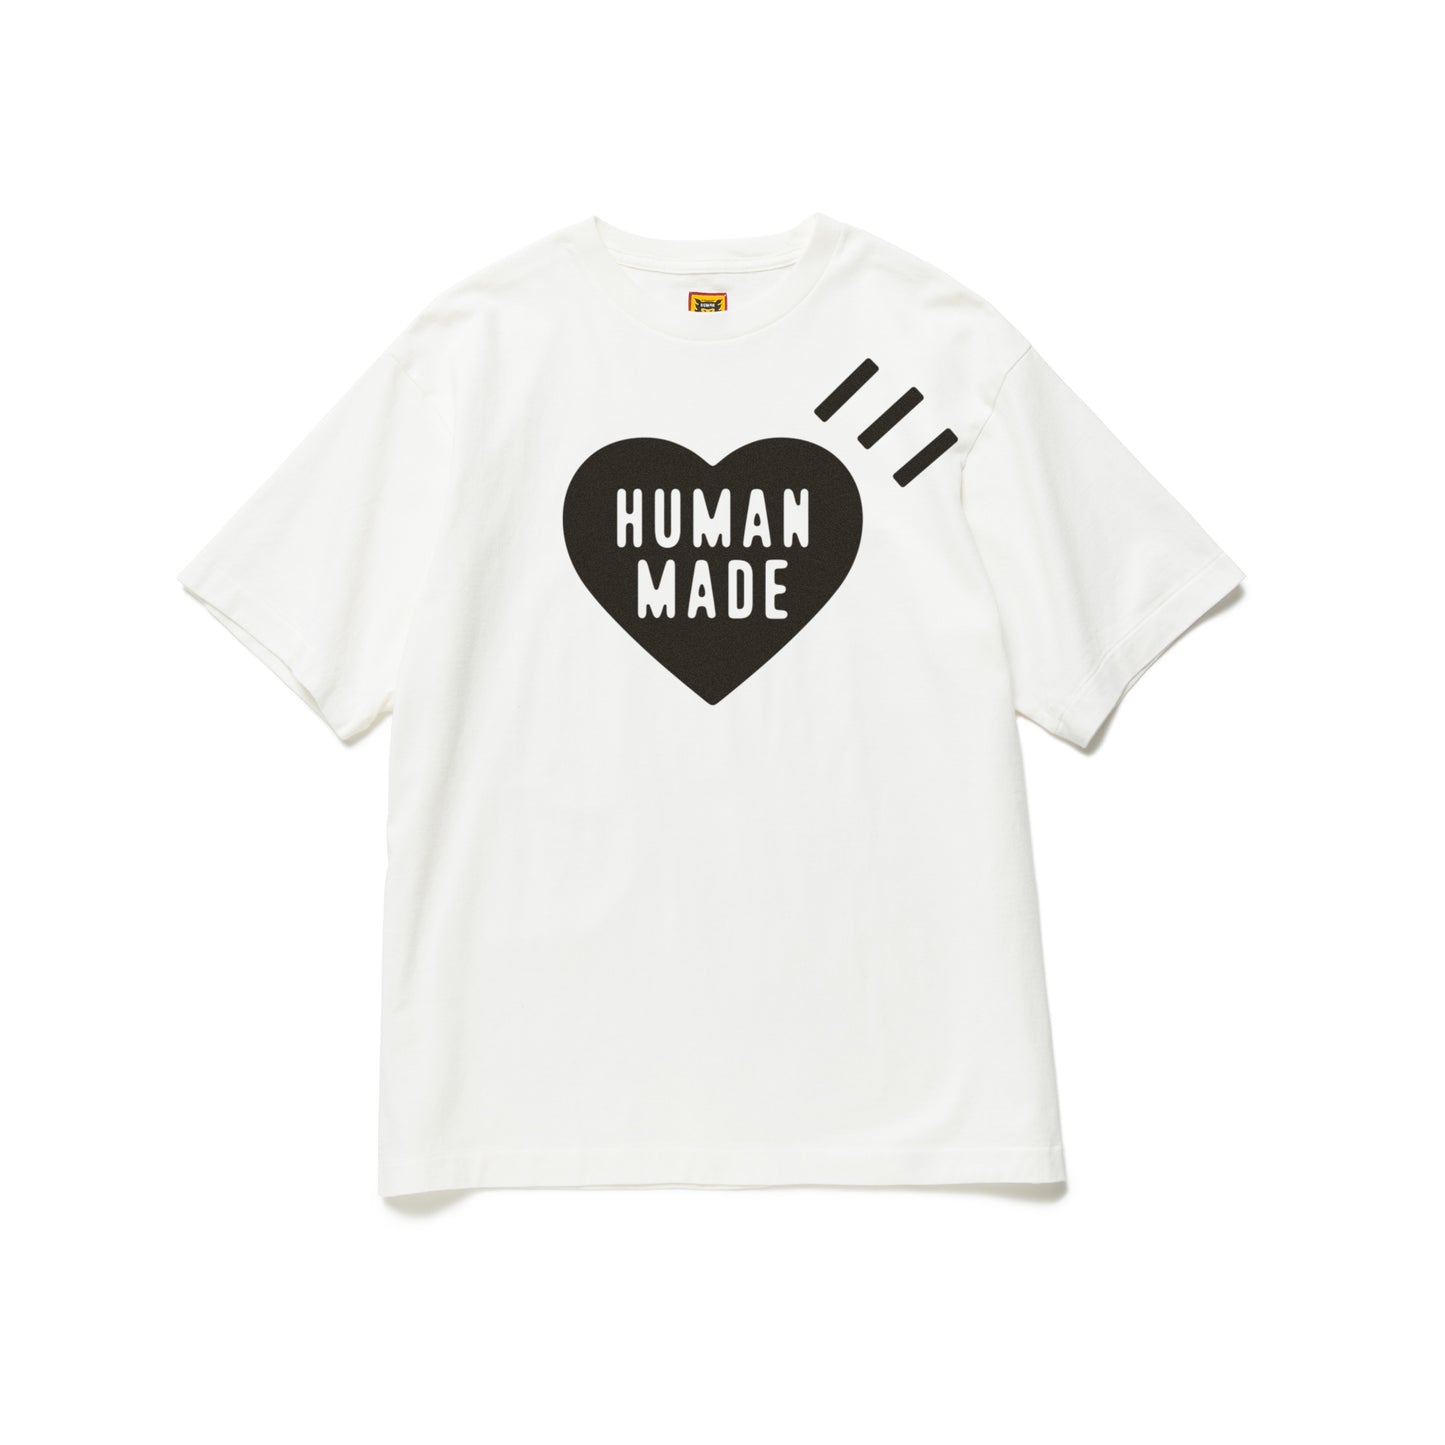 Human made t-shirts